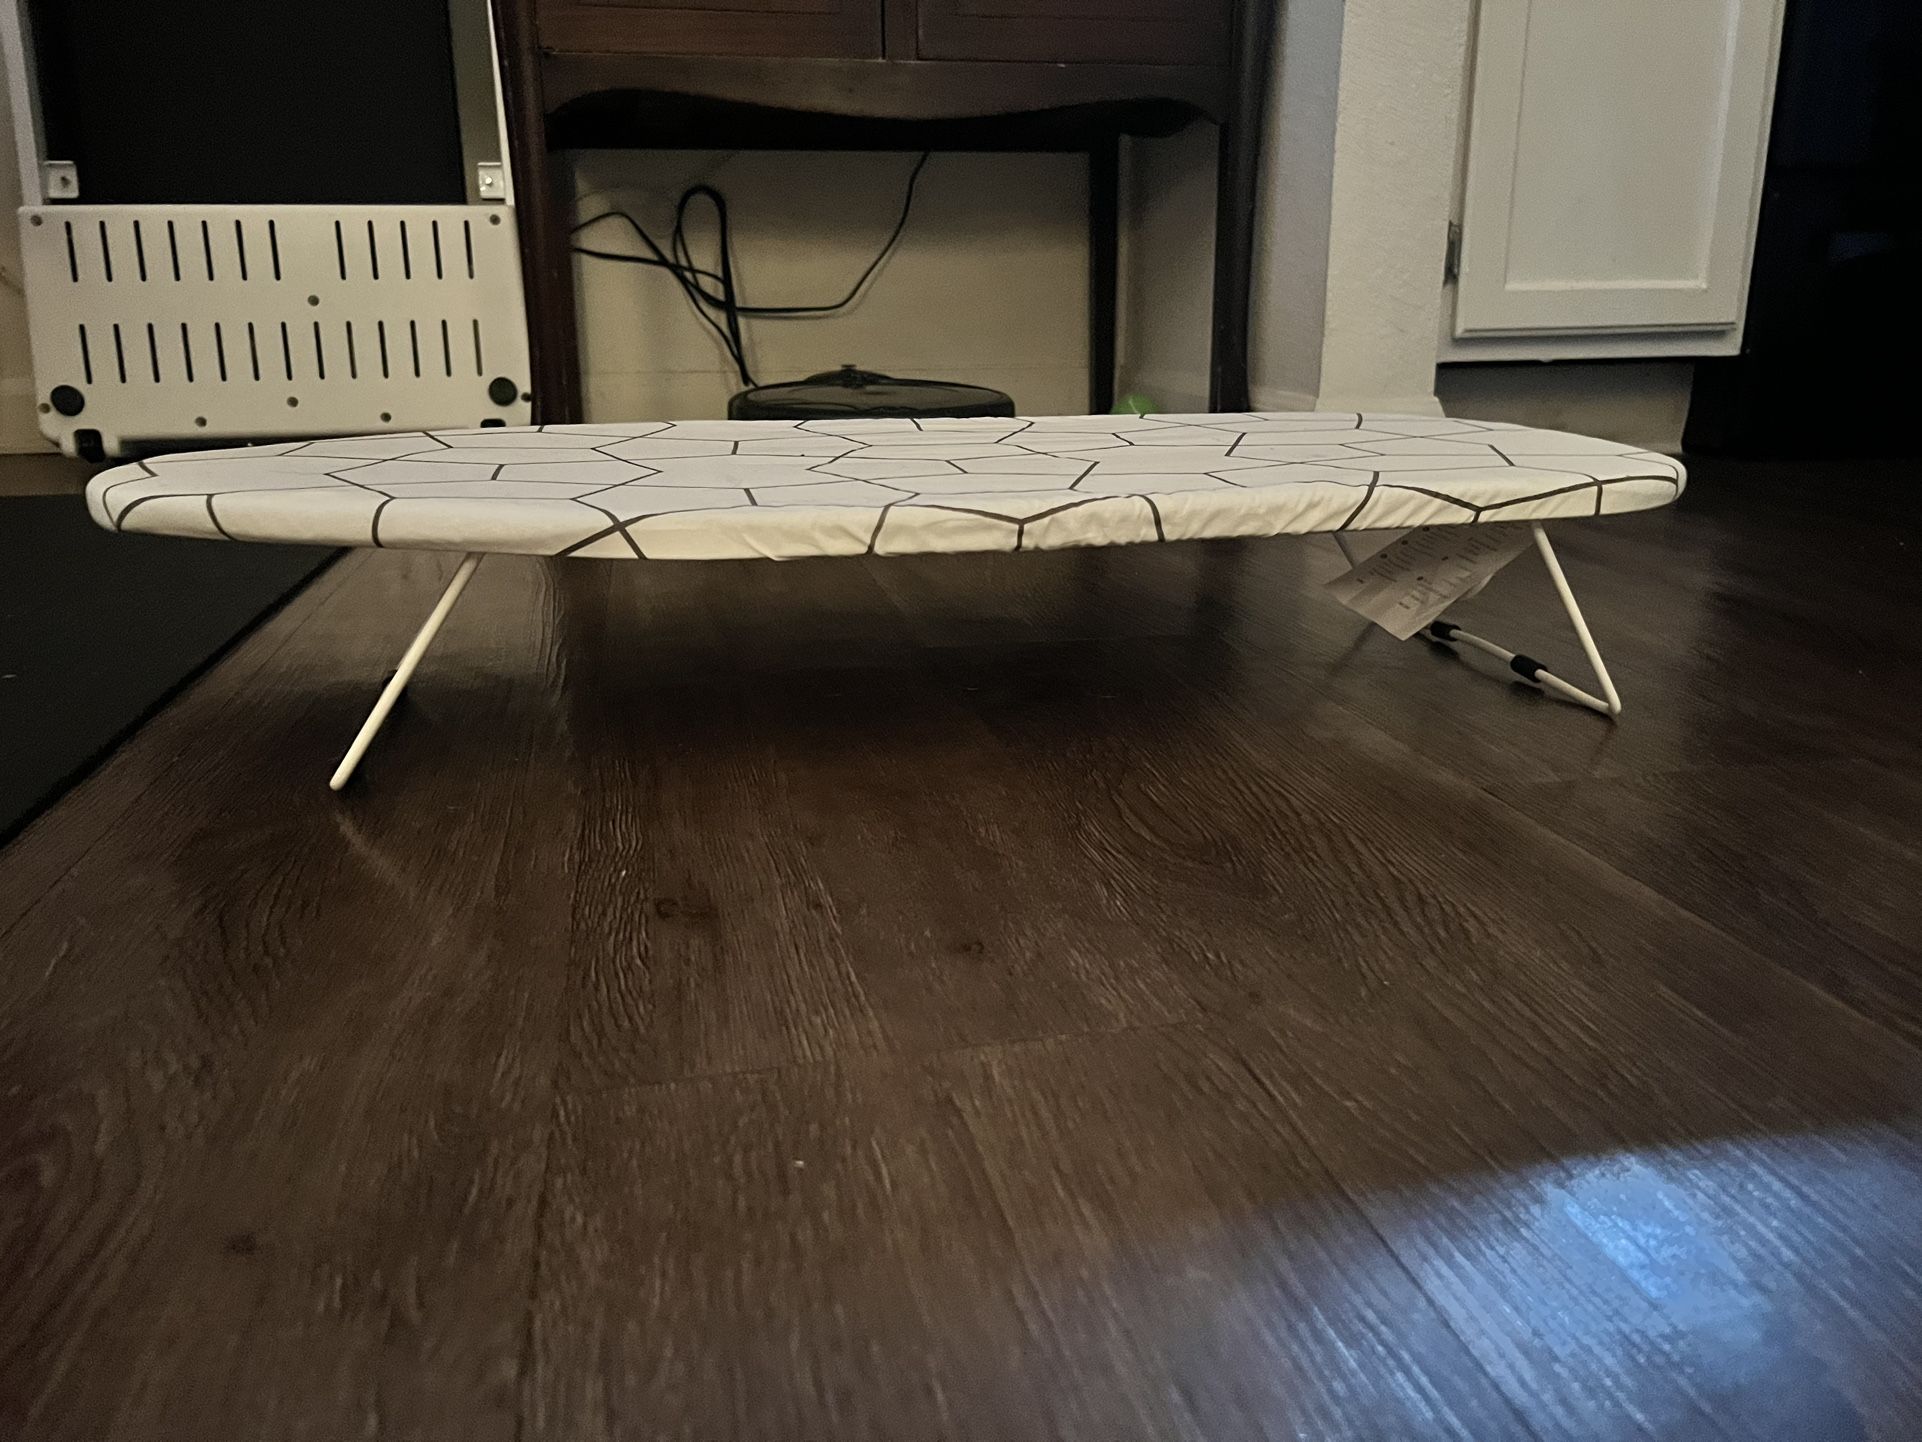 IKEA Tabletop Ironing Board 